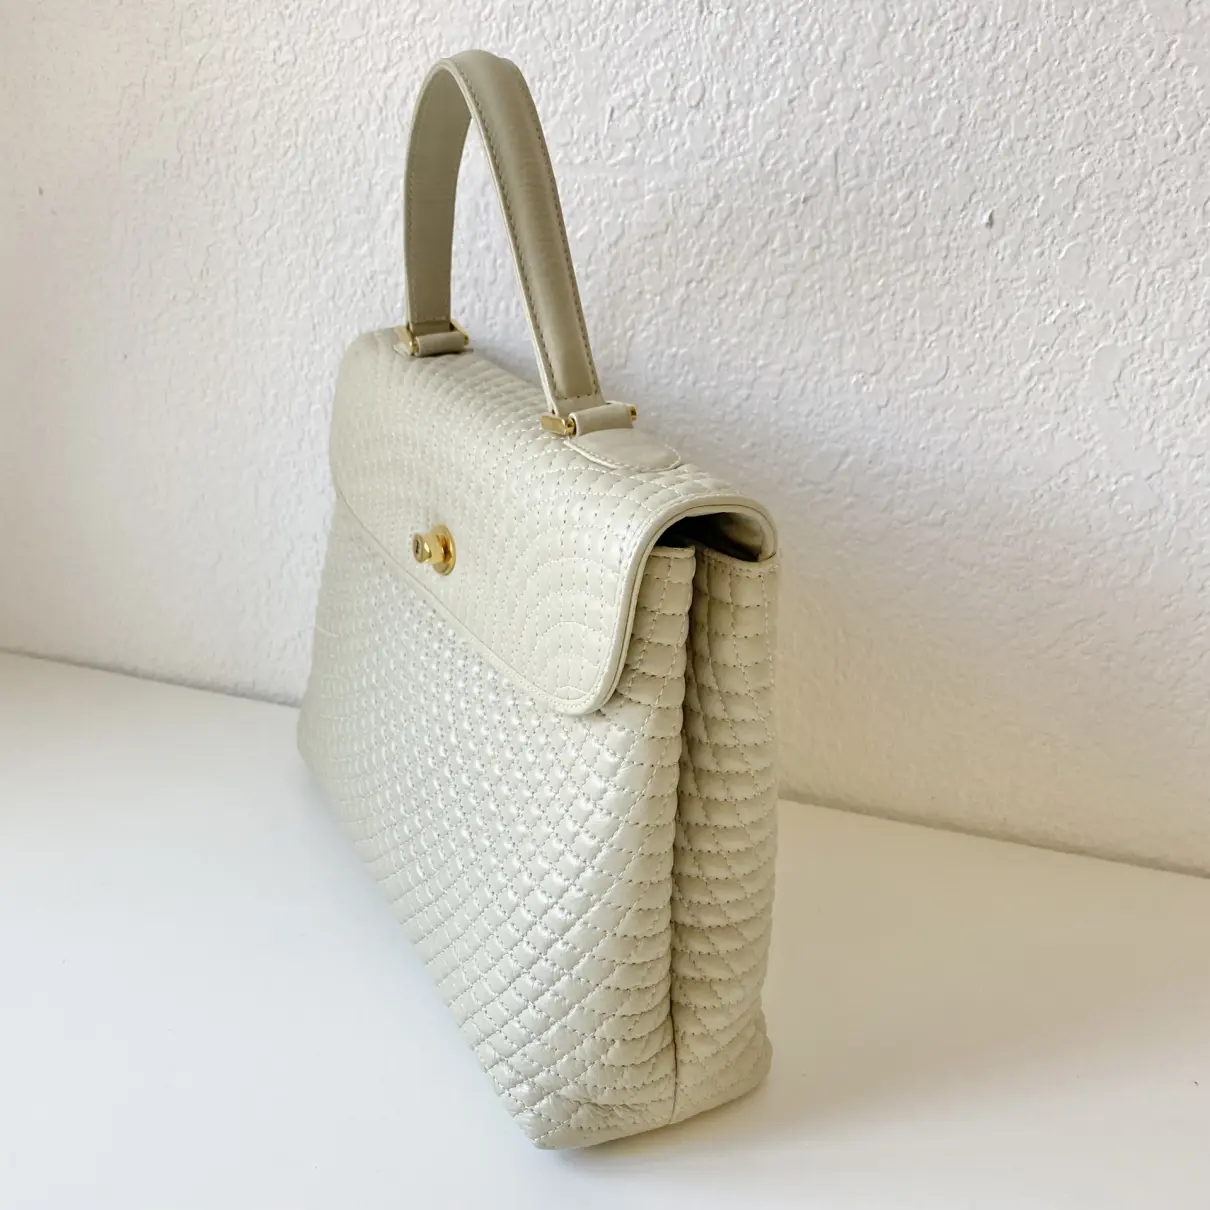 Luxury Bally Handbags Women